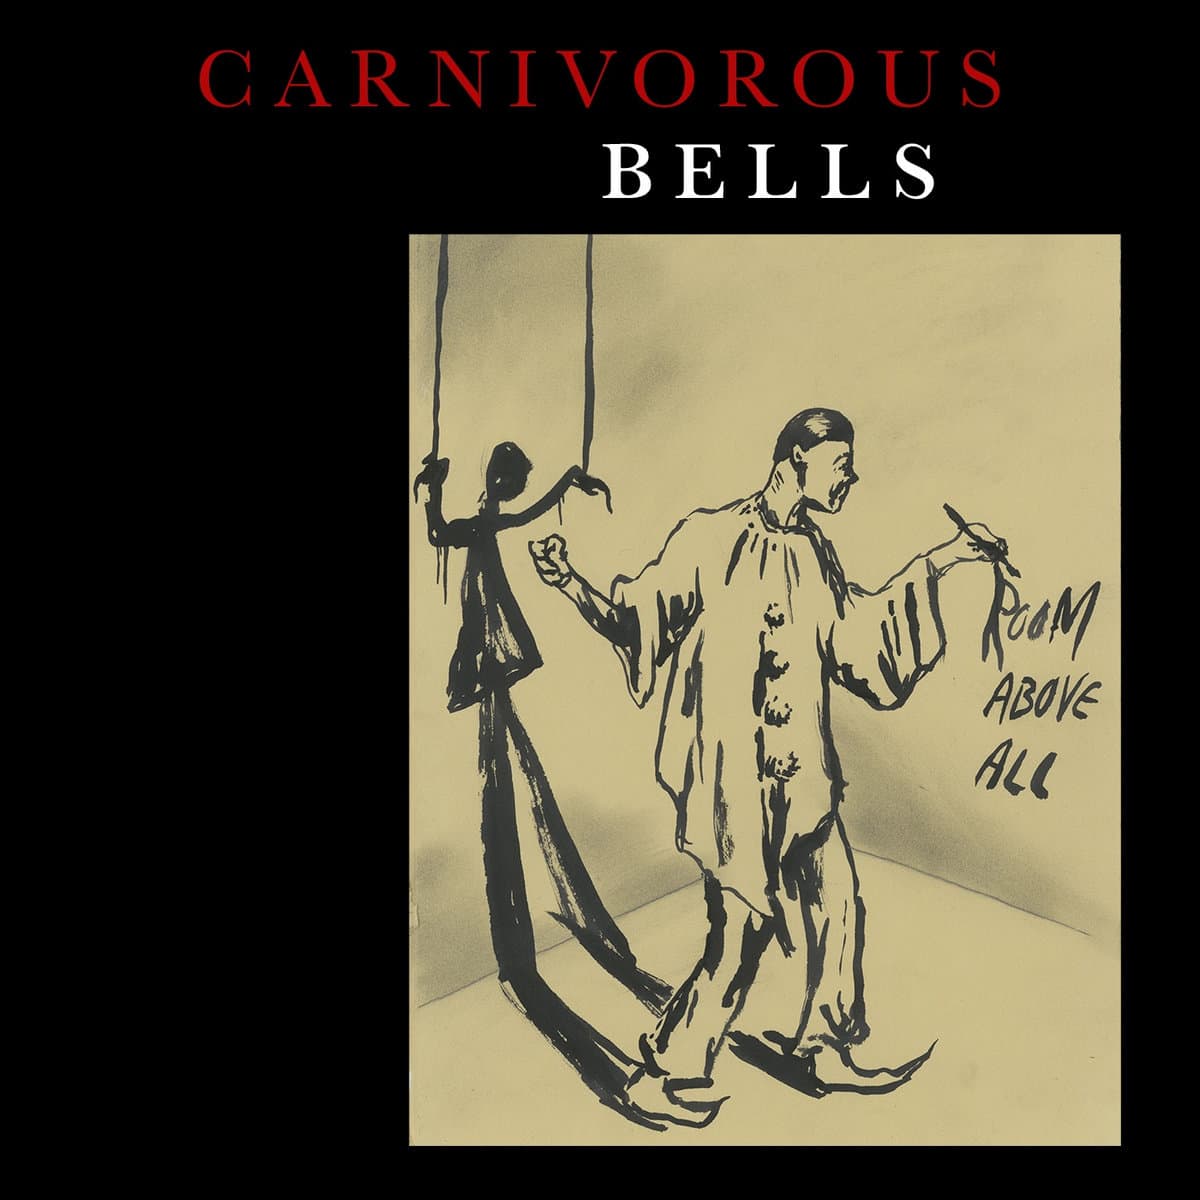 CARNIVOROUS BELLS - ROOM ABOVE ALL Vinyl LP